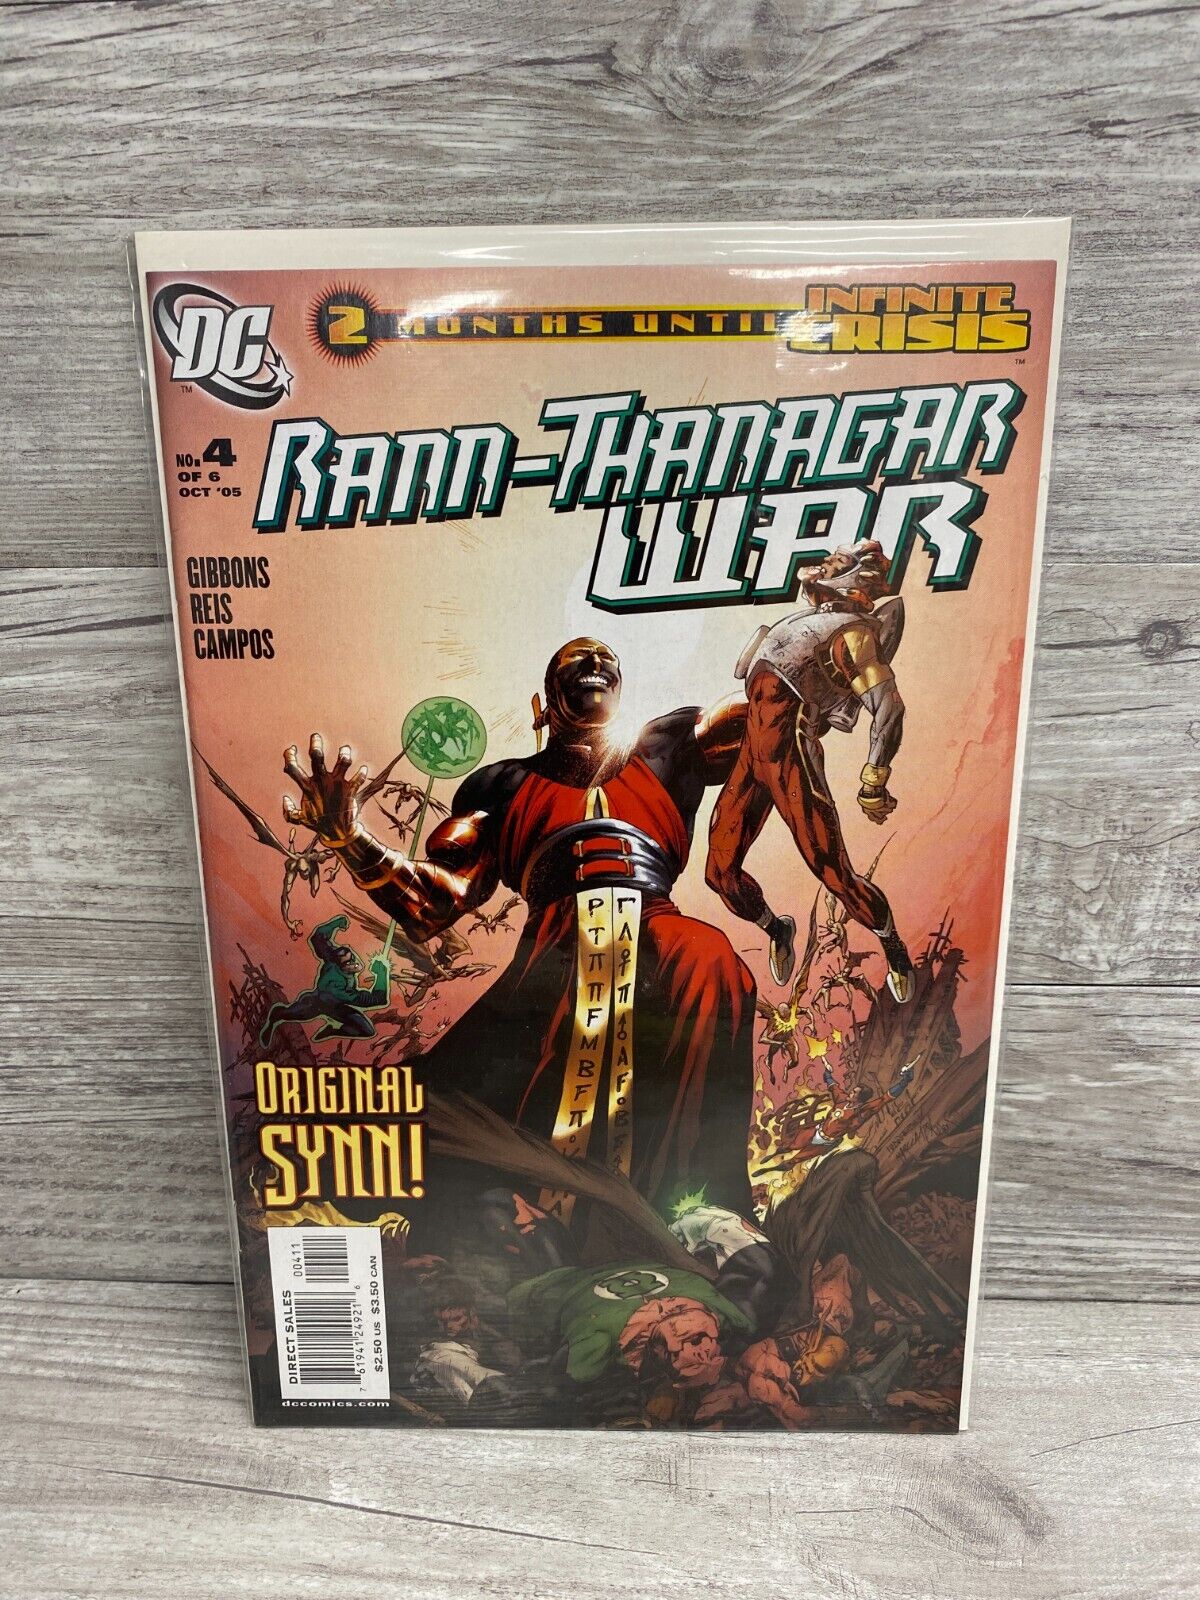 DC Comics Rann-Thanagar War #4 Modern Age October 2005 Original Synn Comic Book